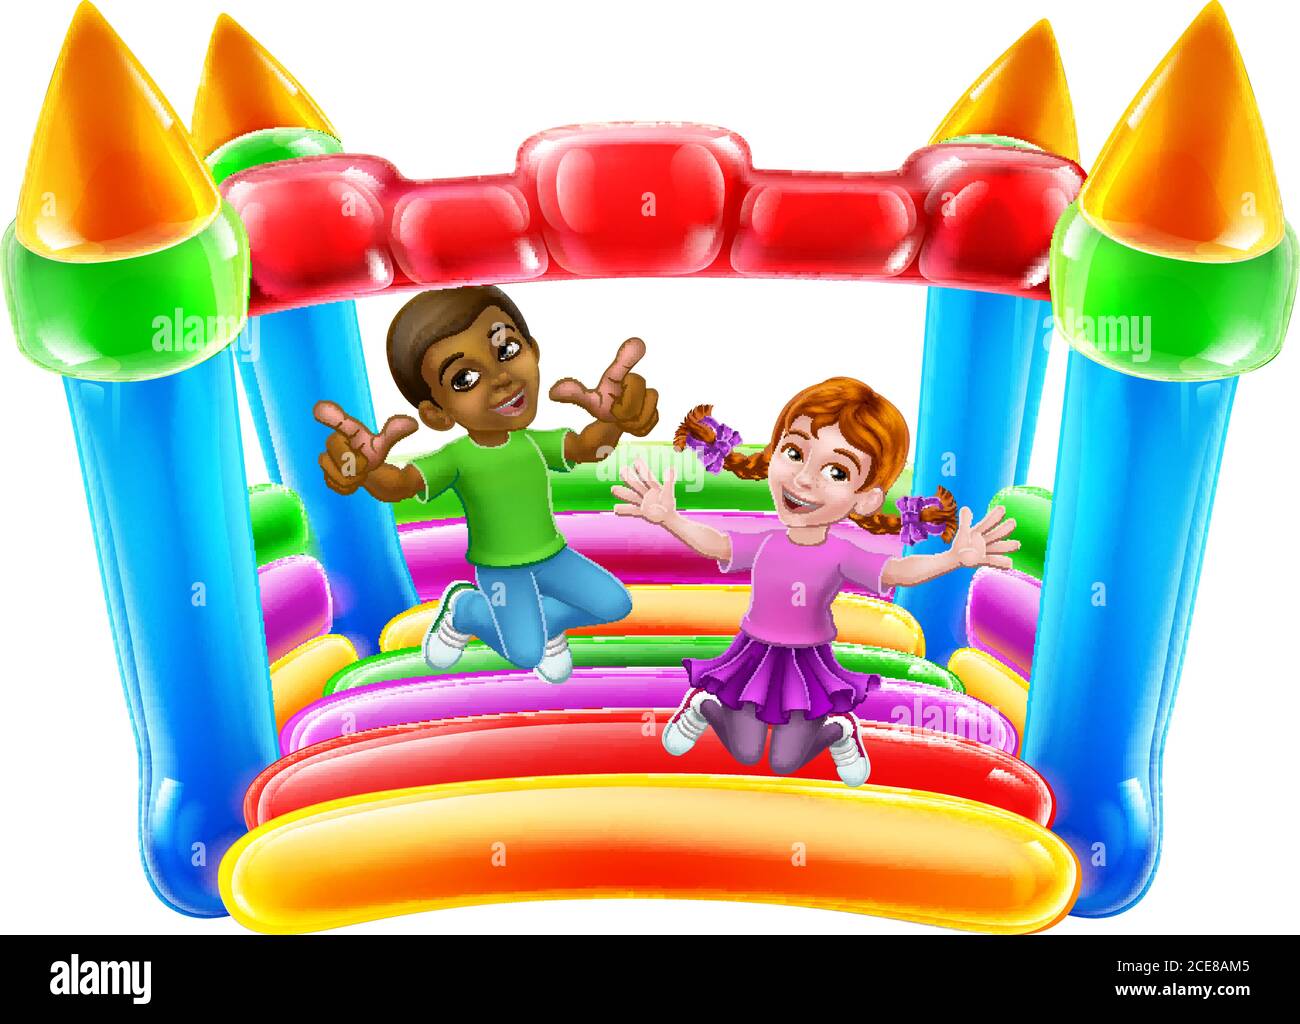 Bouncy House Castle Jumping Girl Boy enfants Cartoon Illustration de Vecteur